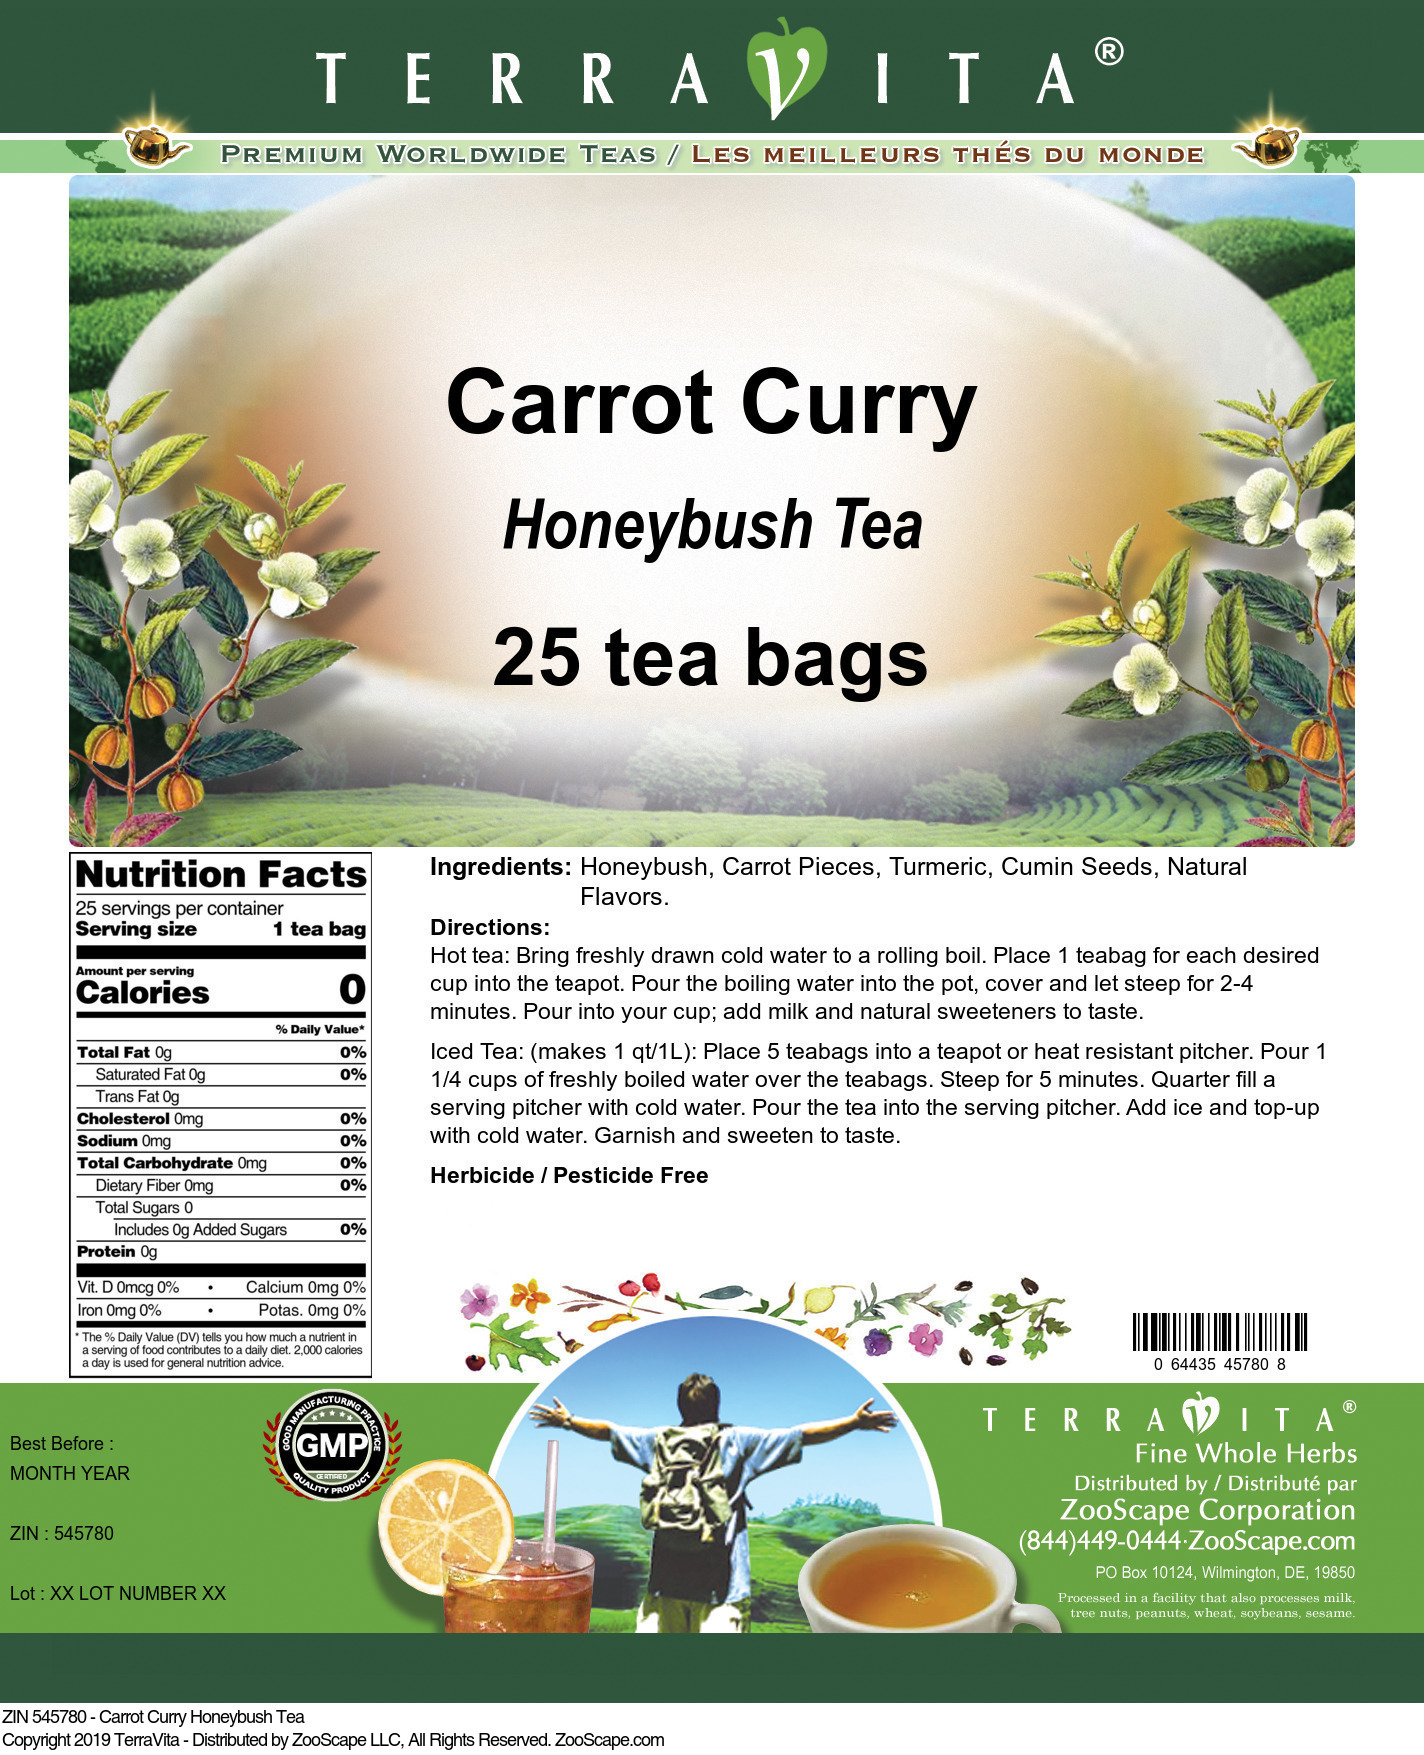 Carrot Curry Honeybush Tea - Label